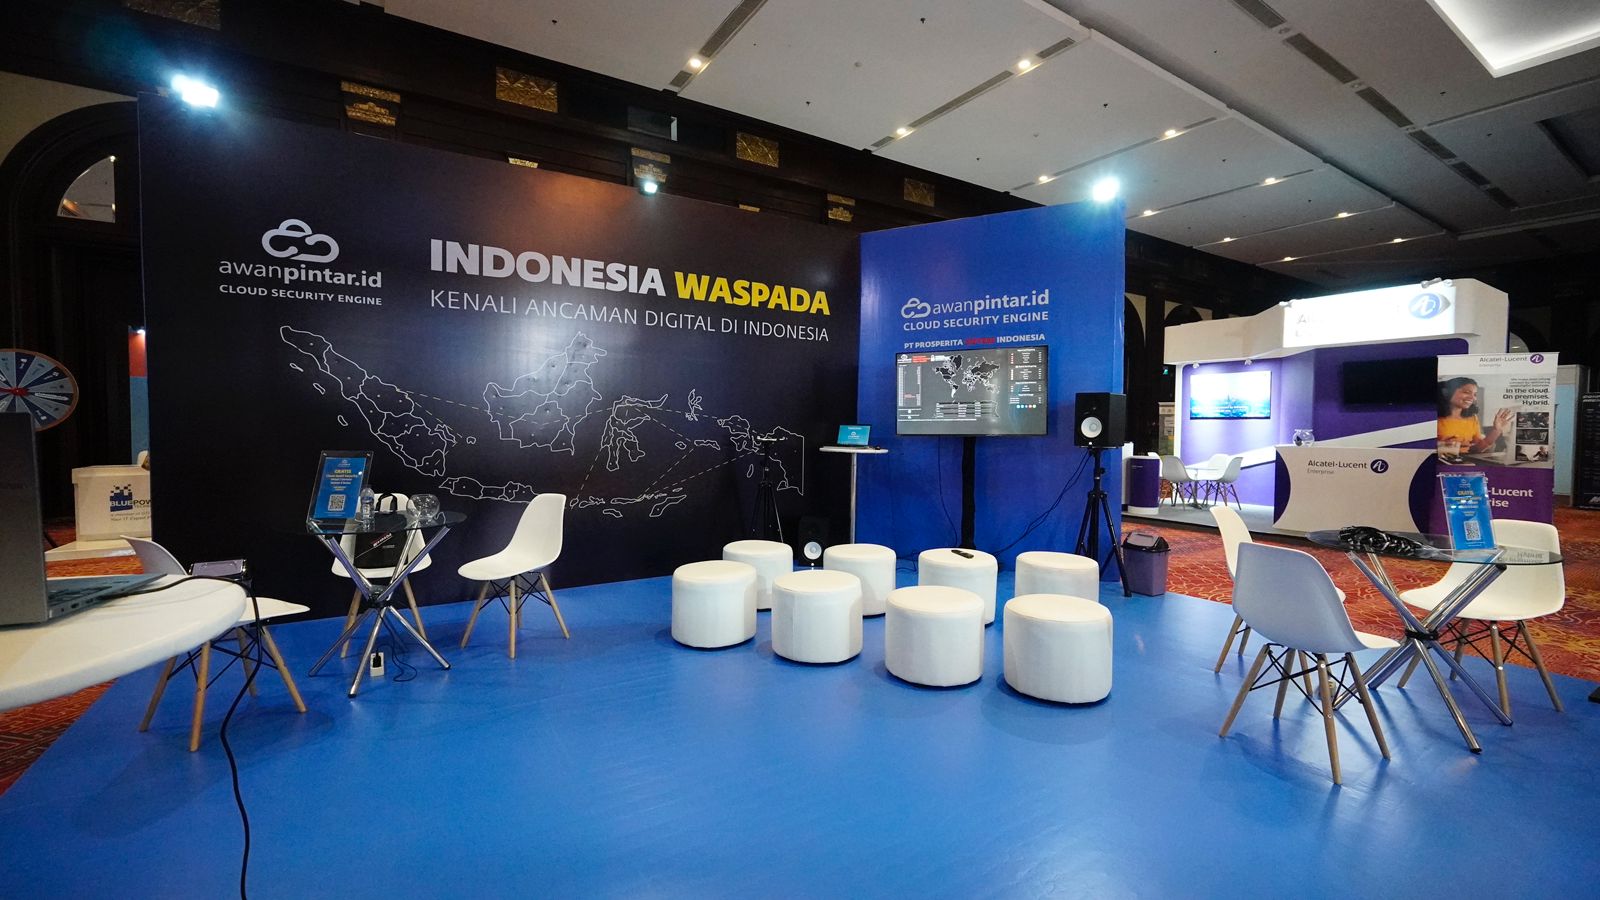 INDONESIA WASPADA: Upaya AwanPintar.id Perkuat Ketahanan Digital Nasional